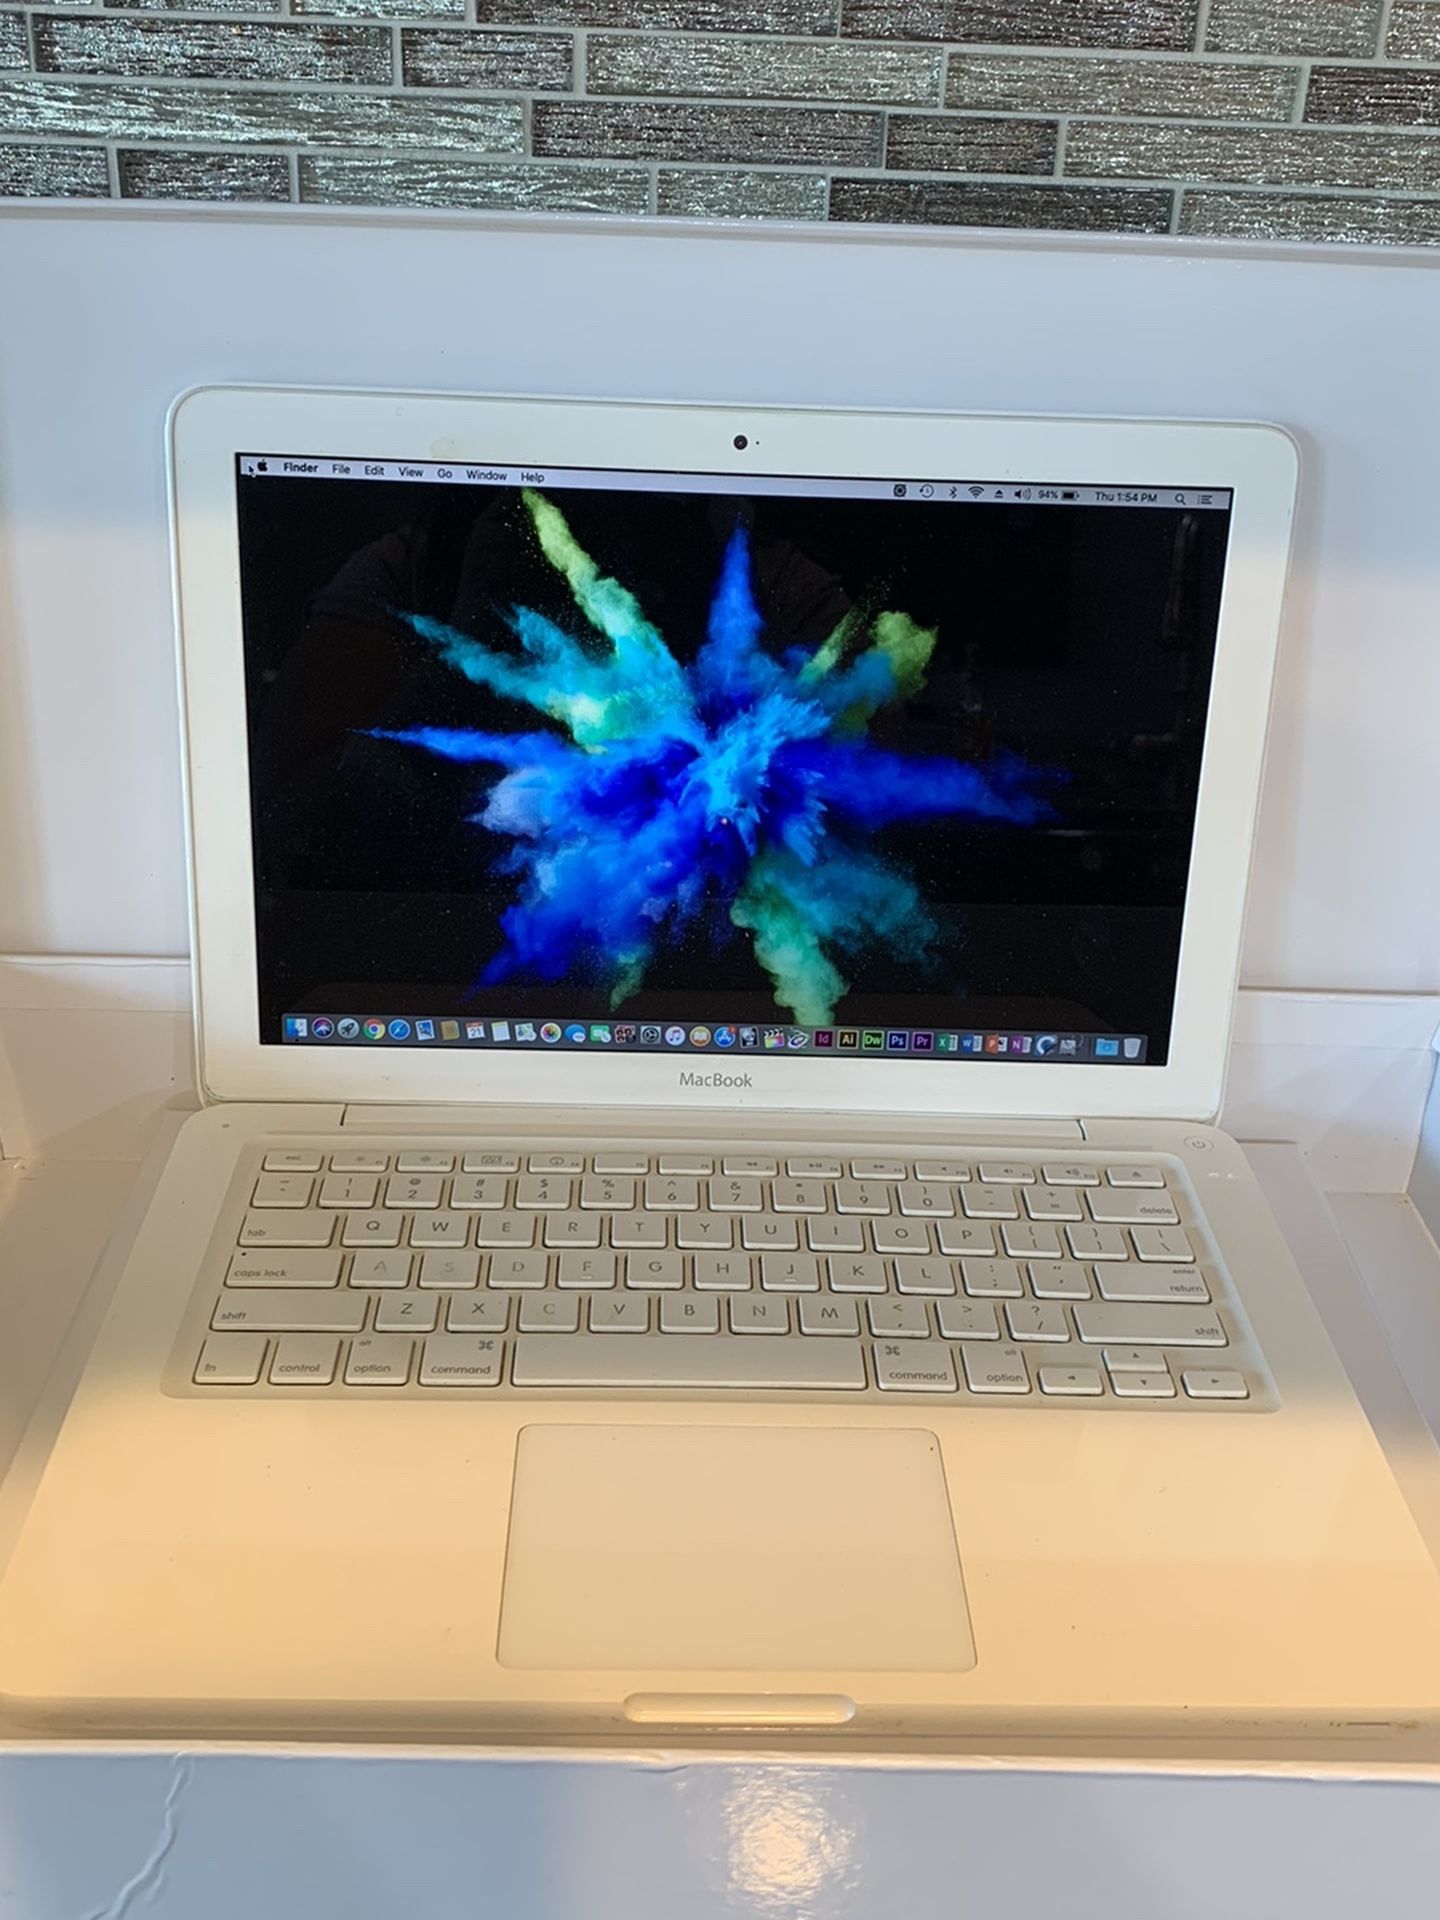 13” Apple MacBook Unibody Laptop with Webcam, macOS High Sierra and Microsoft Office